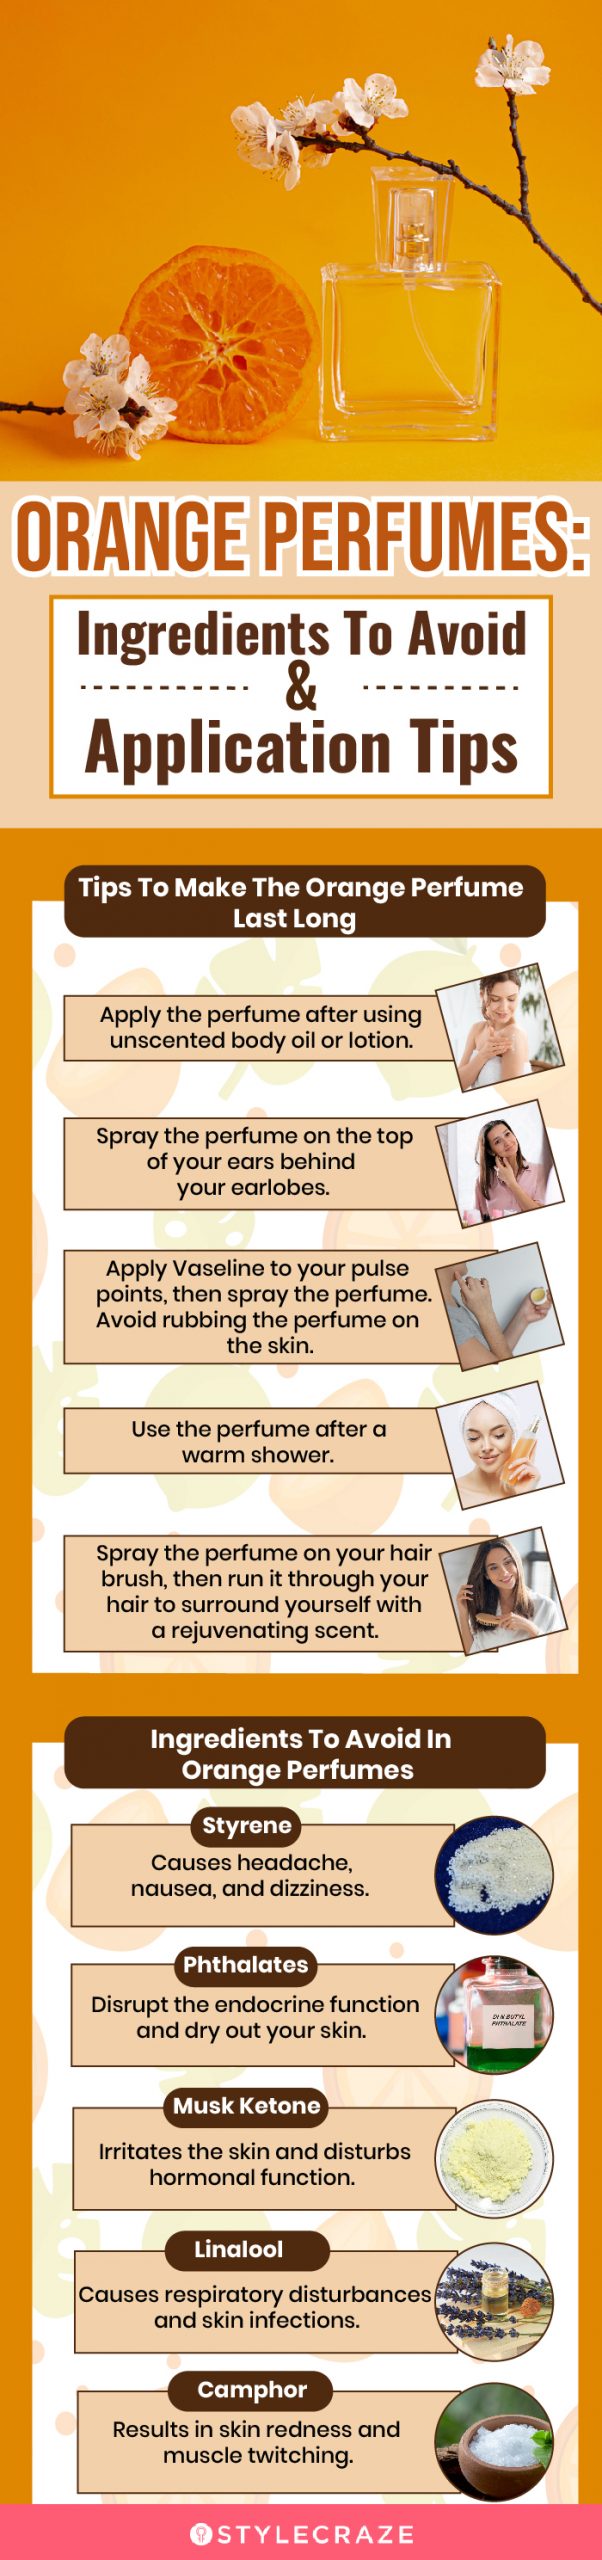 Orange Perfume: Ingredients To Avoid & Application Tips (infographic)